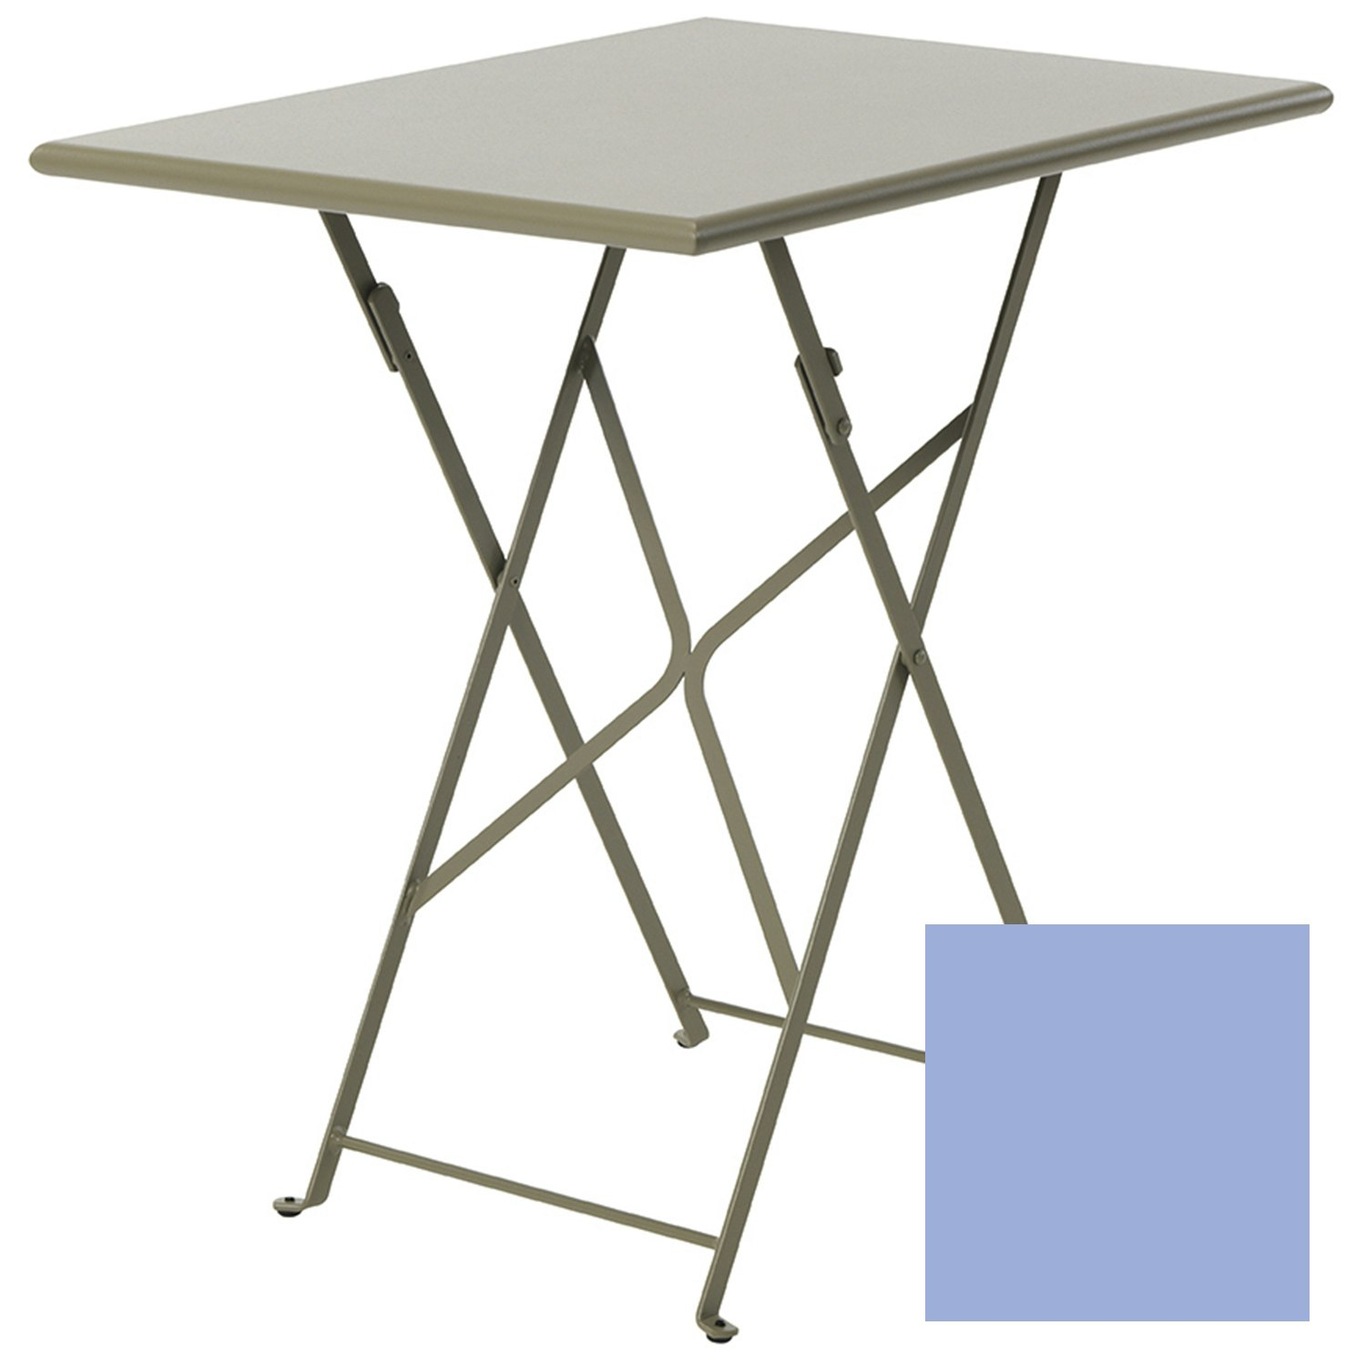 Flower Foldable Table 55x70 cm, Plumbago Blue